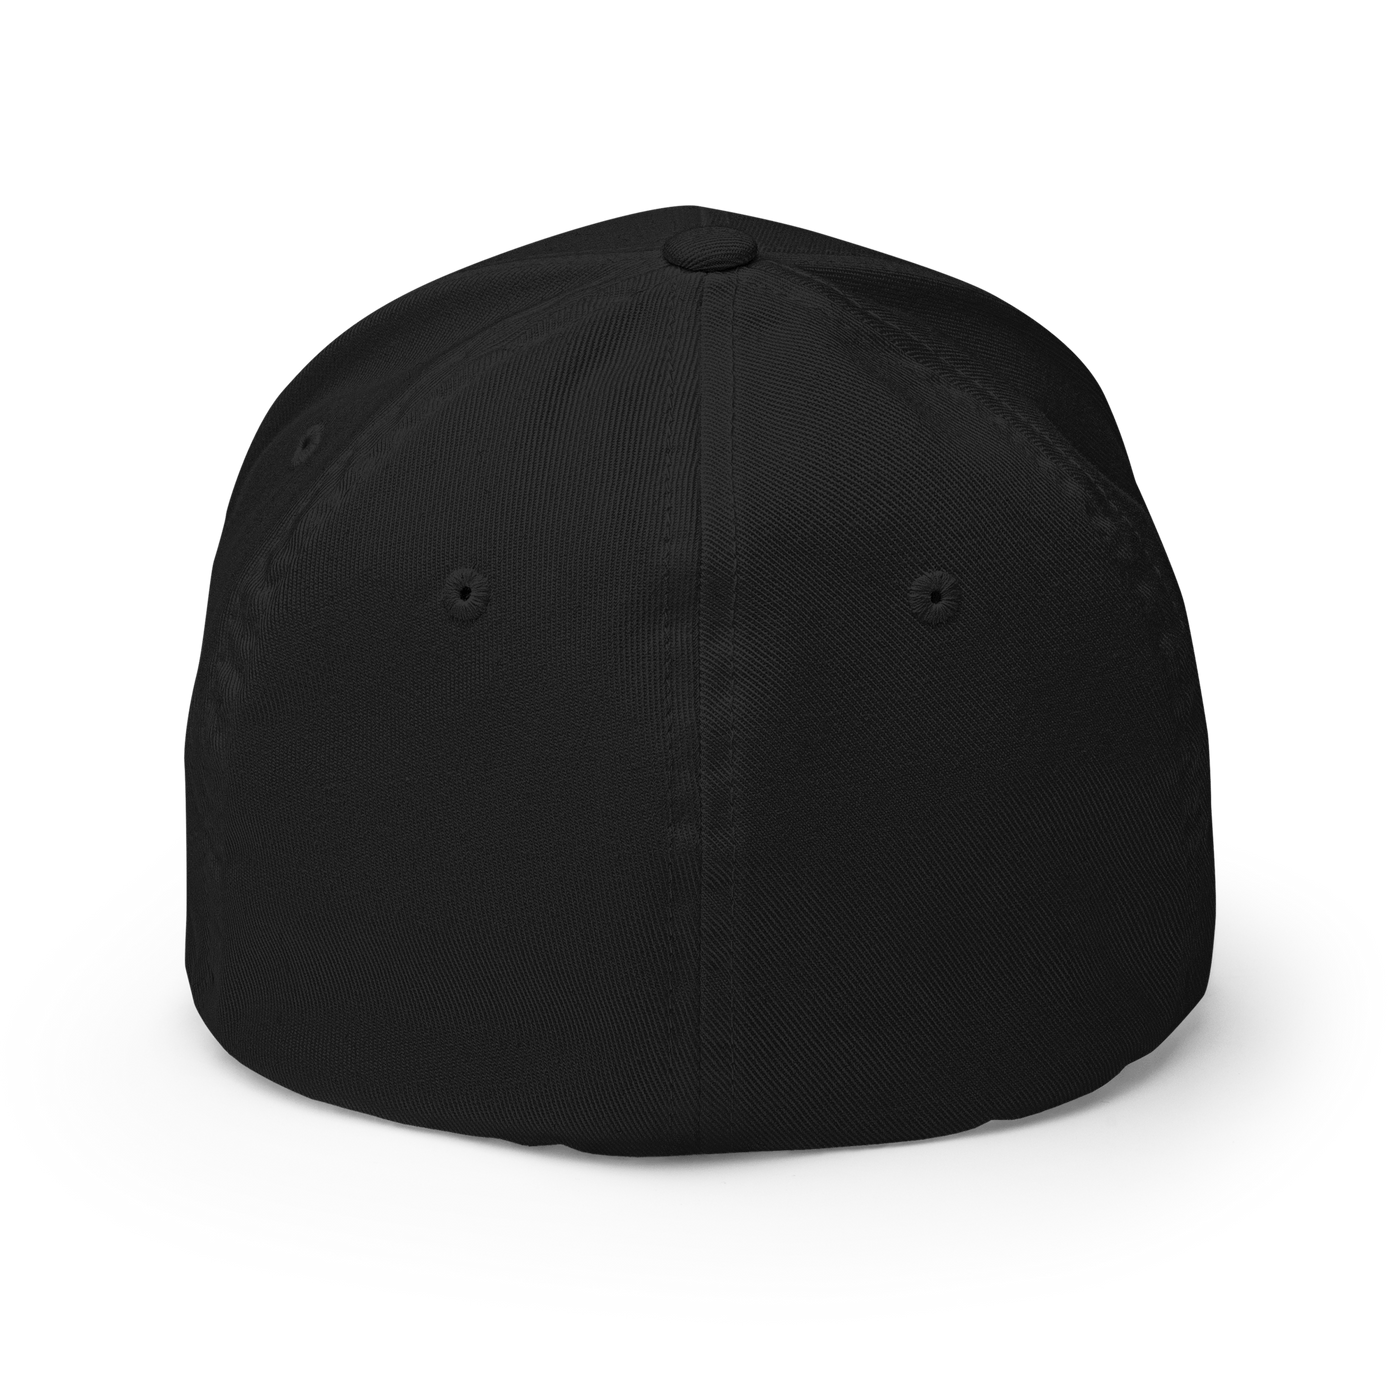 Always Late Flexfit Cap - Dark Navy - S/M - Just Another Cap Store